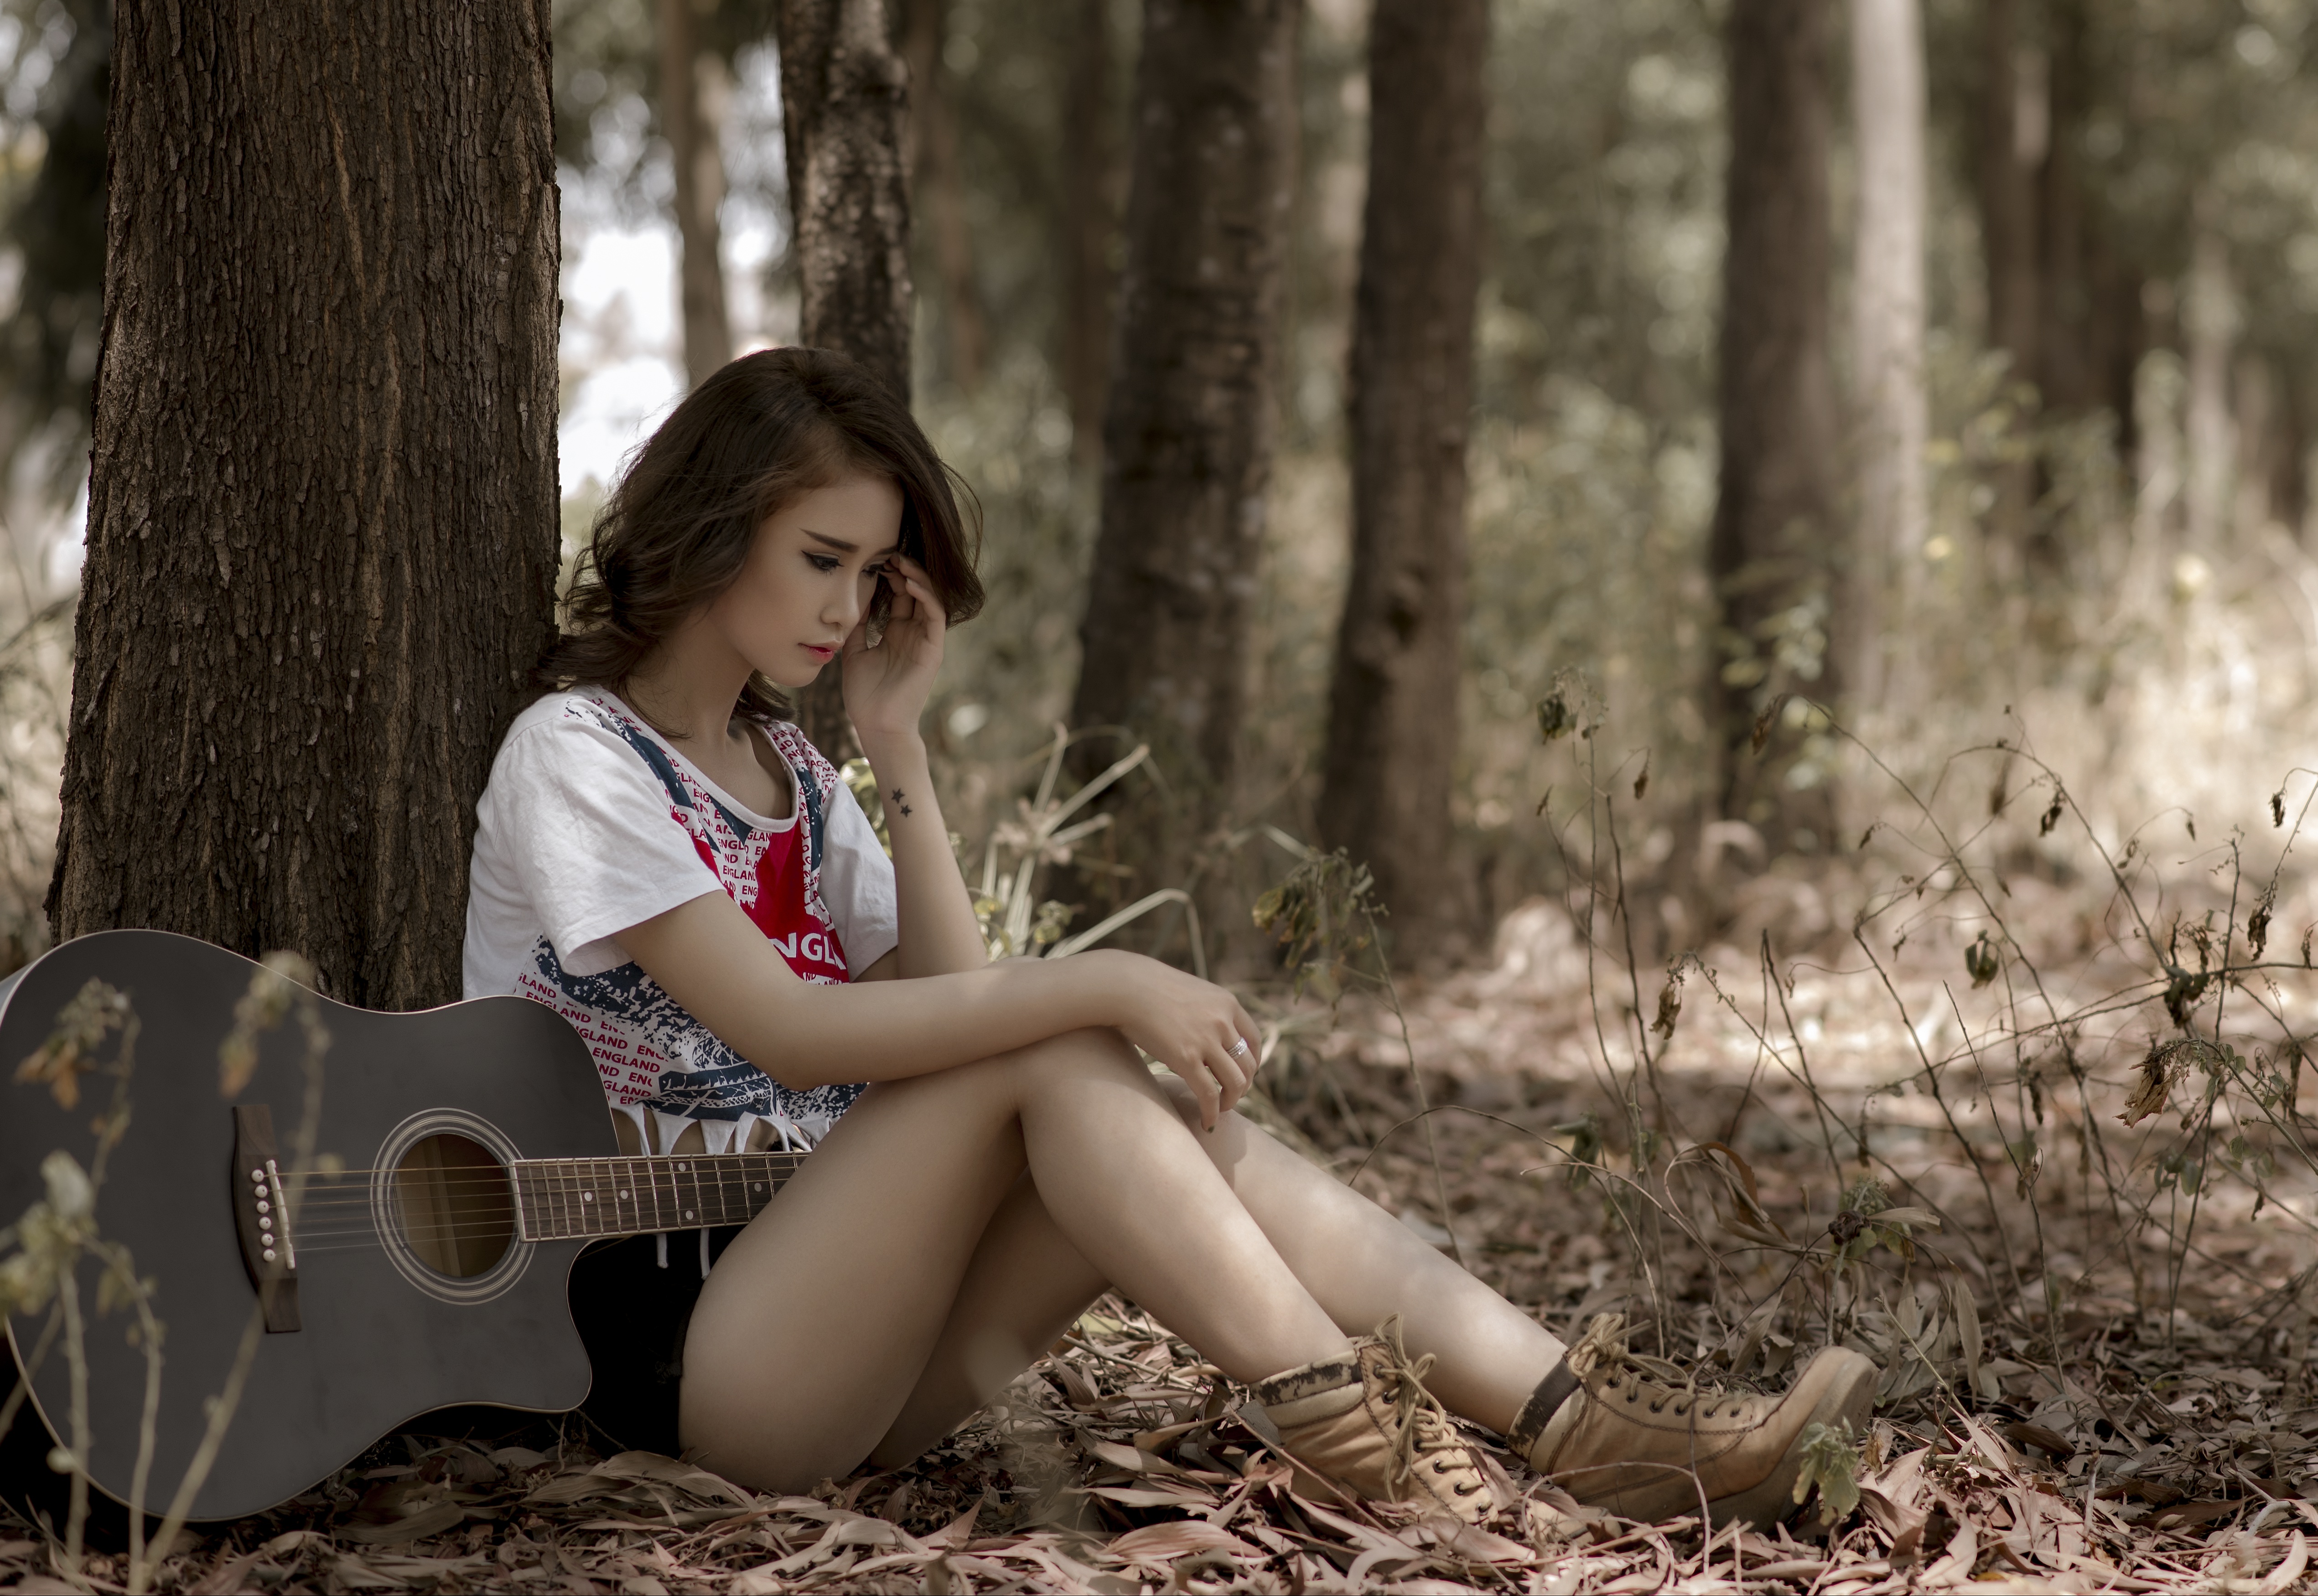 Beautiful girls песня. Девушка сидит с гитарой. Девушка с гитарой в лесу. Фотосессия с гитарой на природе. Девочка сидит с гитарой.